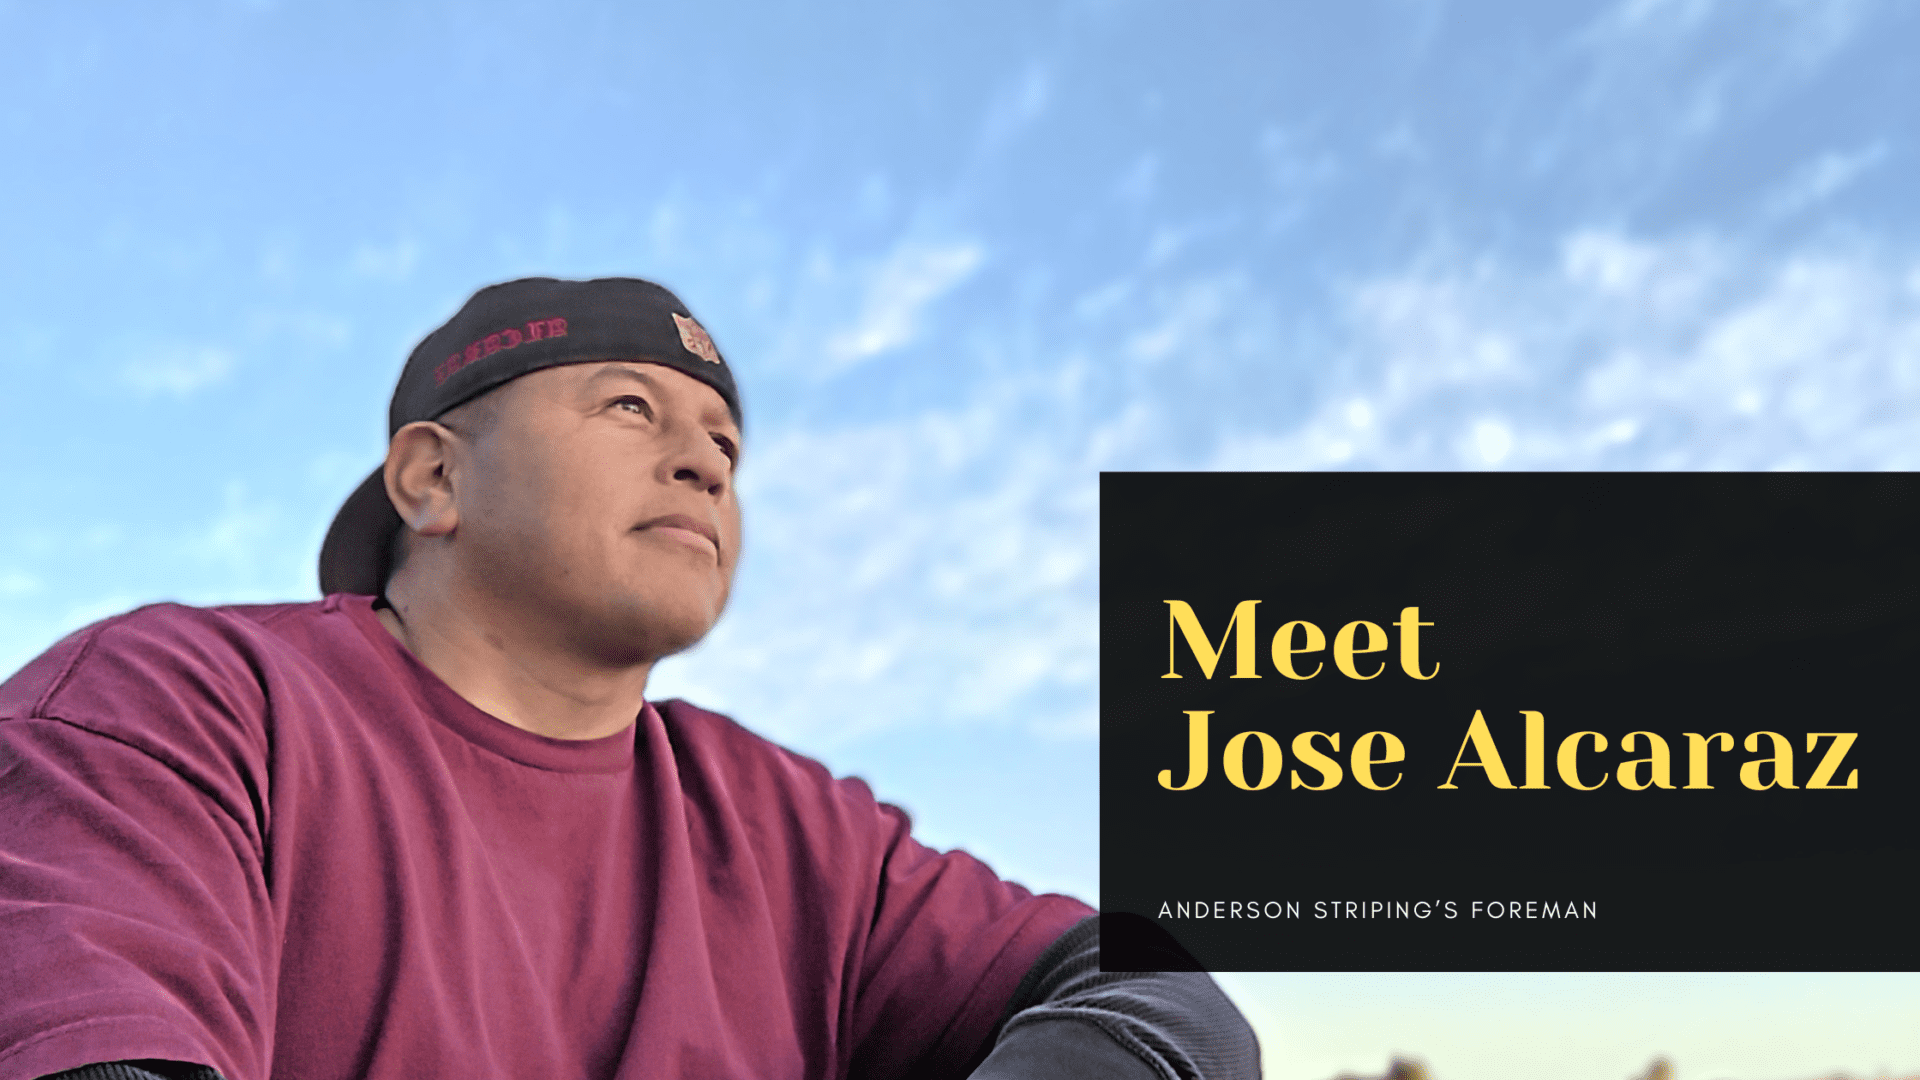 Meet Jose Alcaraz